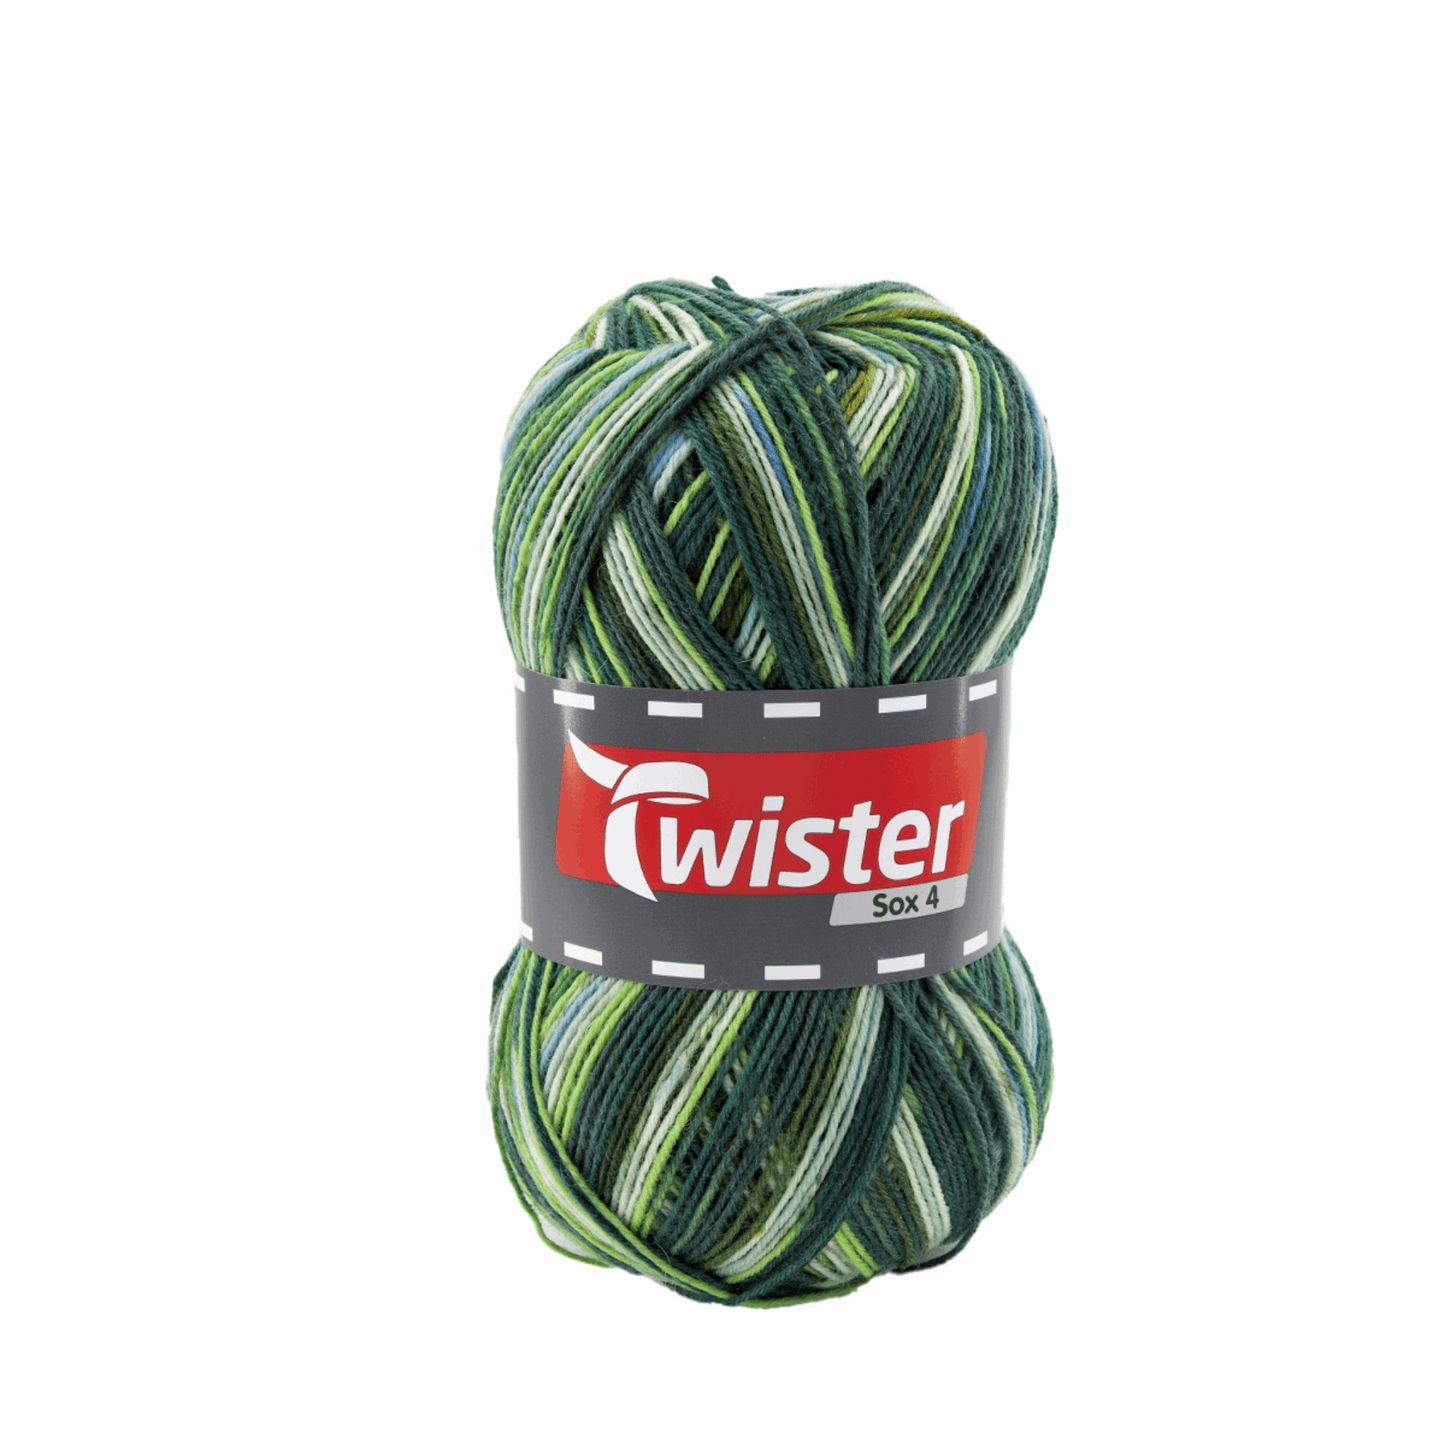 Twister Sox4 Color superwash, grün oliv grau, 98306, Farbe 836